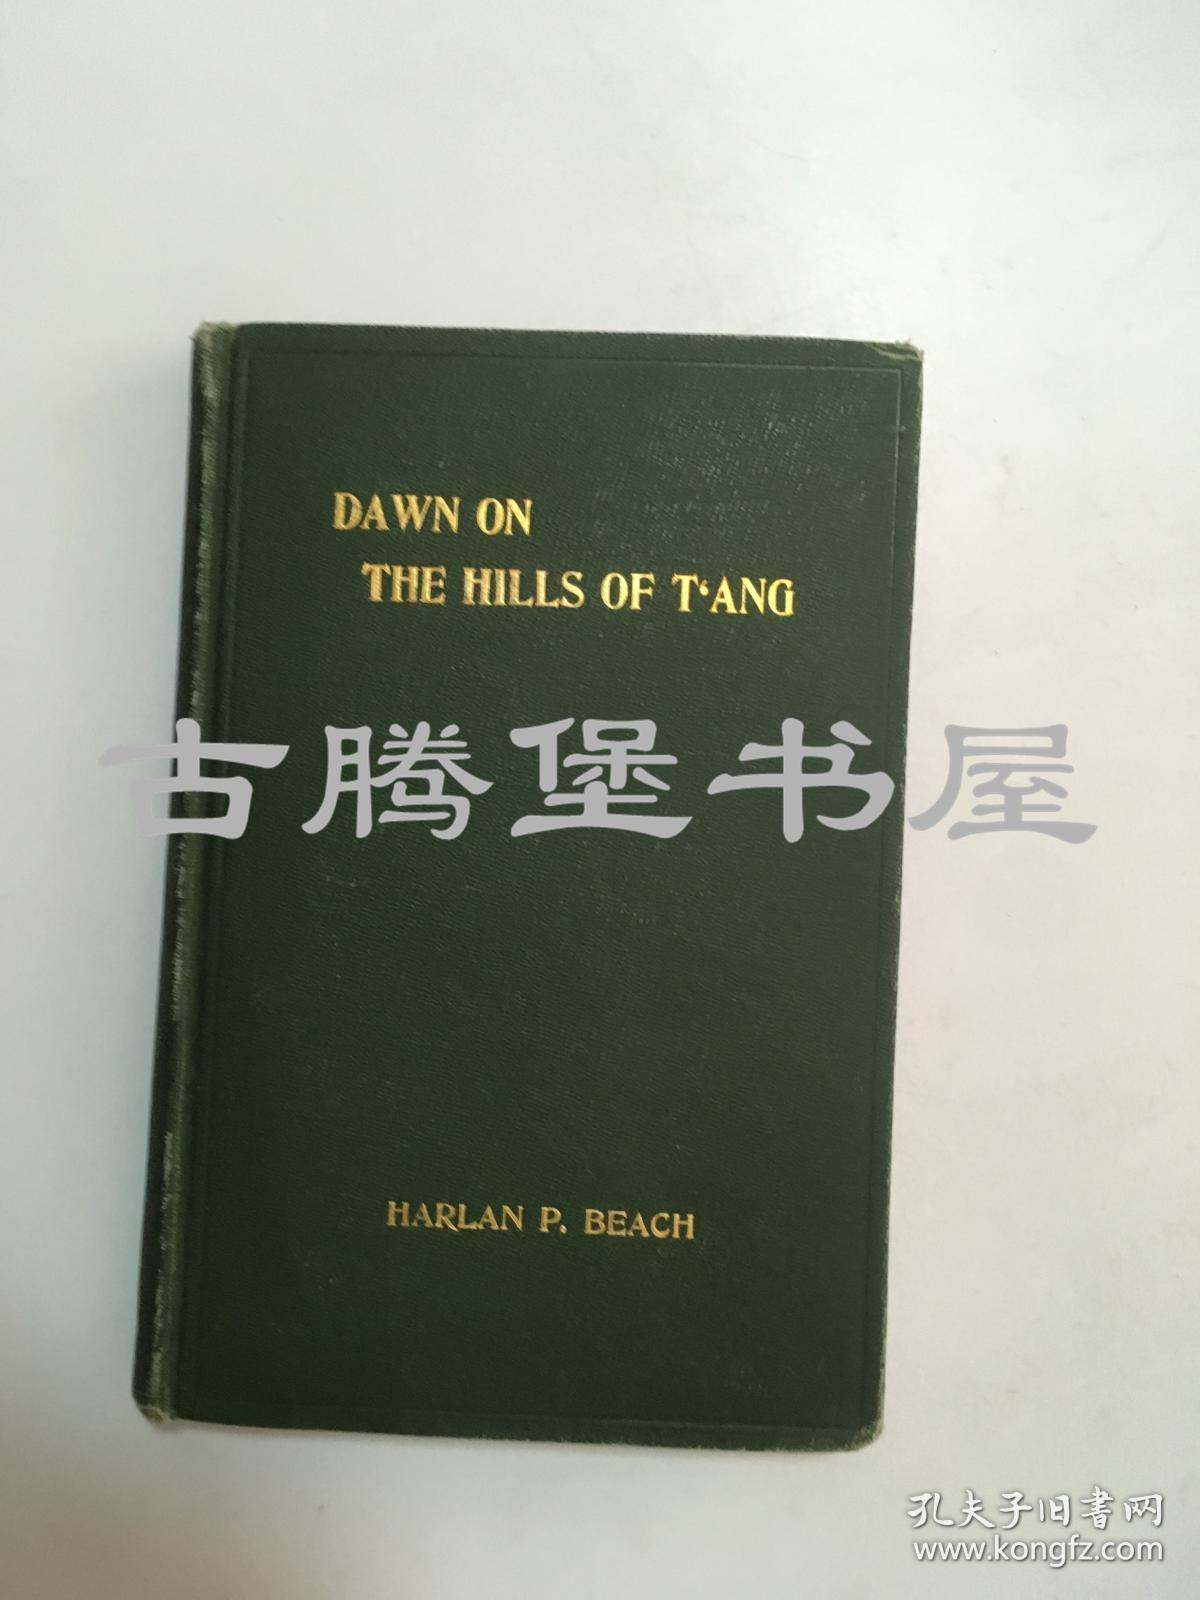 1898年英文原版 ，《盛唐的衰落》 Dawn on the Hills of Tang, or Missions in China（毕海澜《“唐山”的曙光：在华传教事业》）